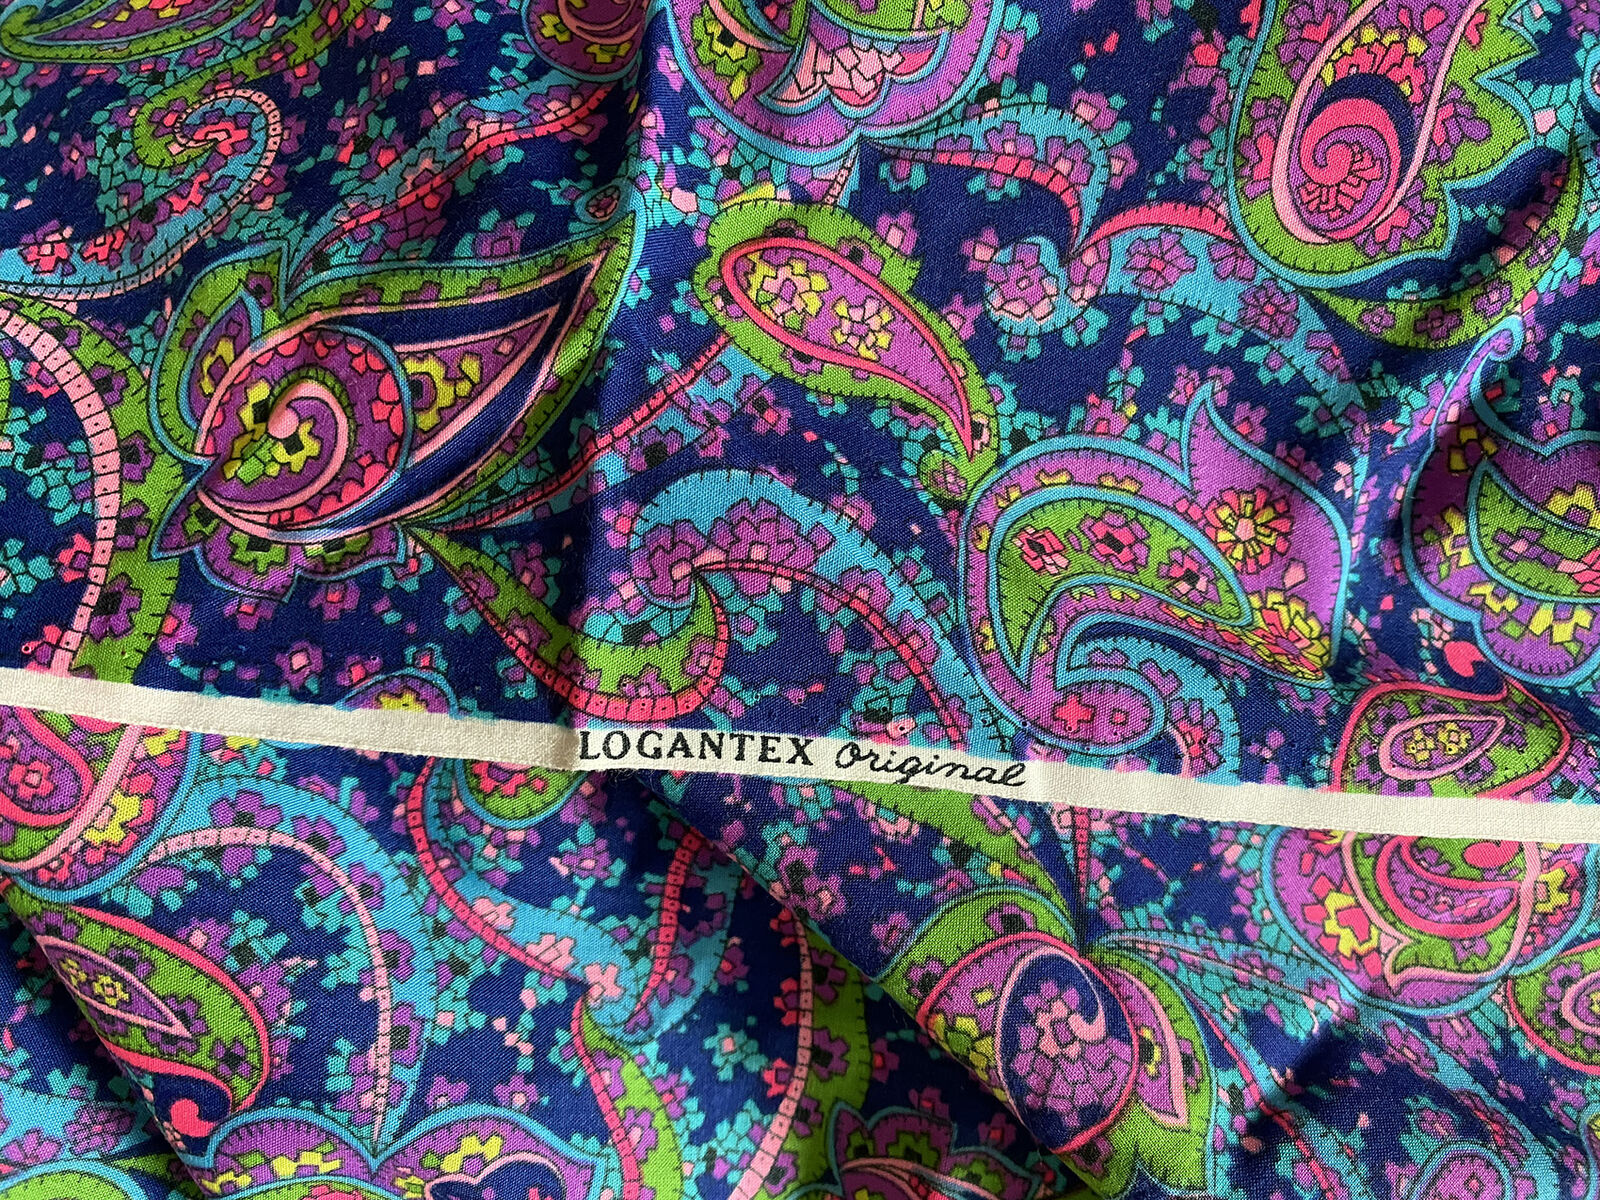 Vtg 60s Hippie Fabric Logantex Original Brilliant Psychedelic Paisley 2.5 Yards